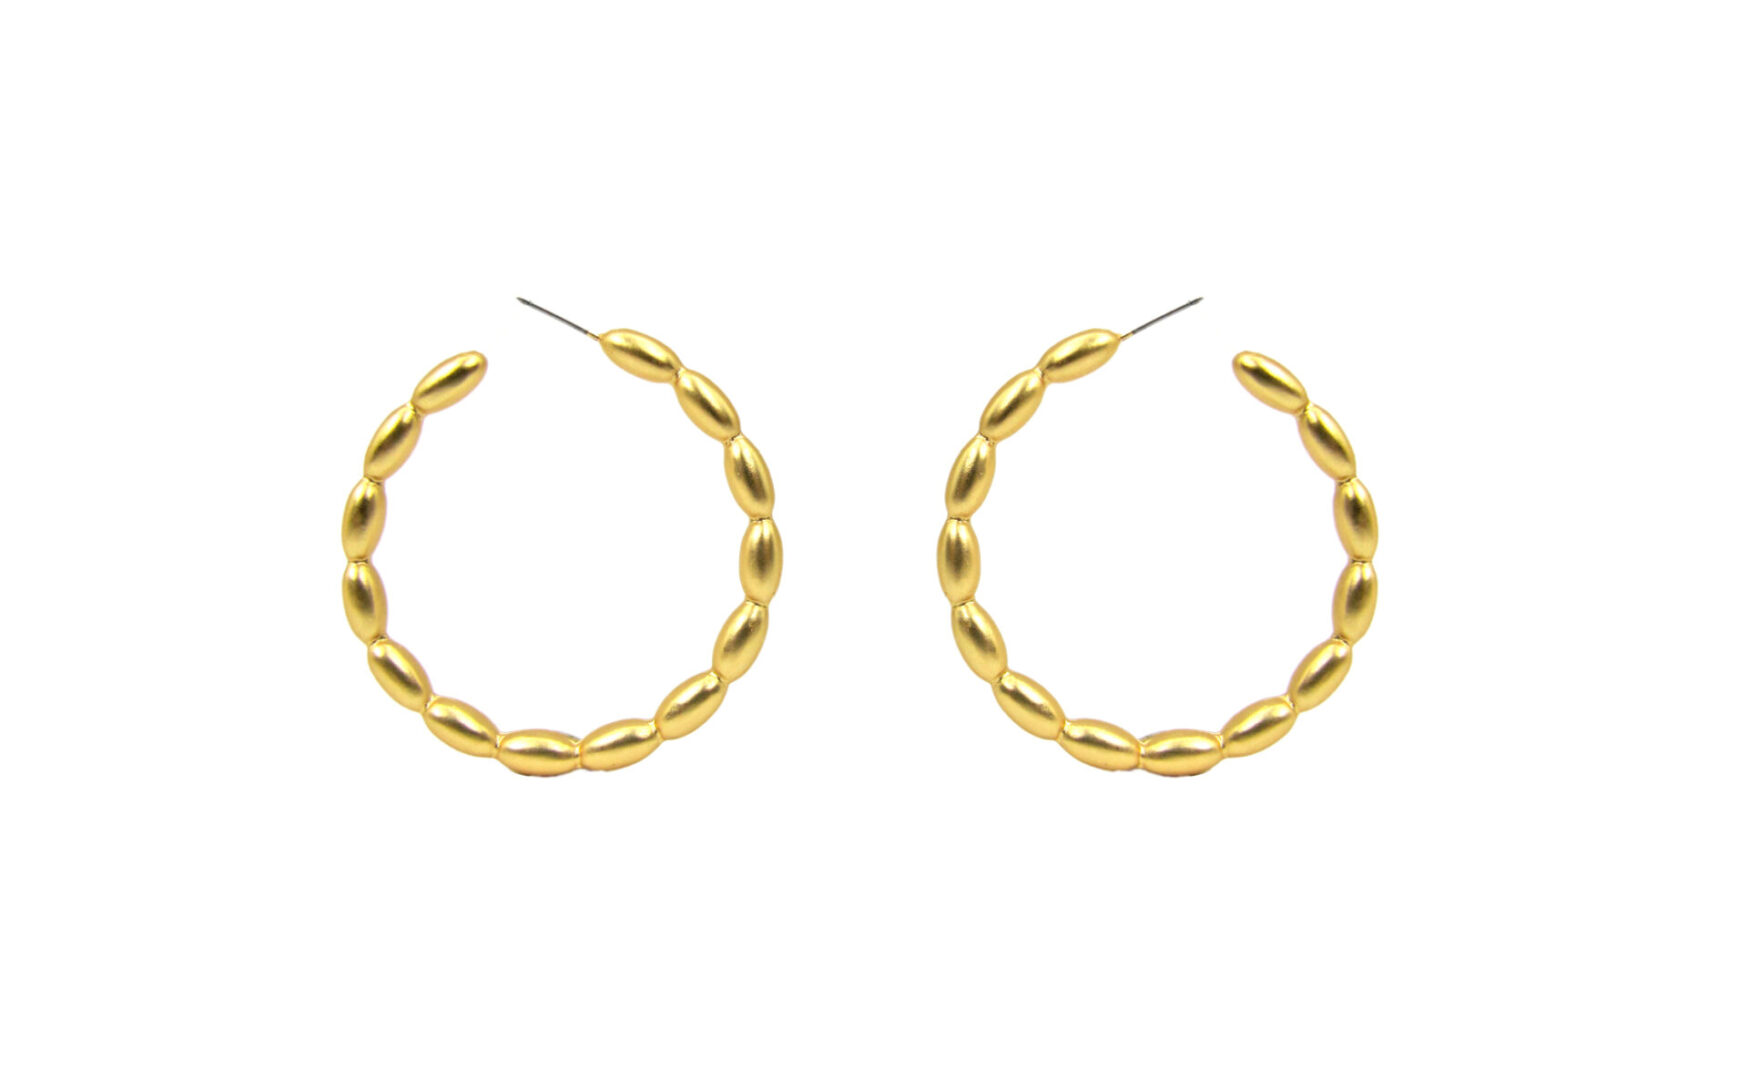 golden earrings with interconnected beadwork